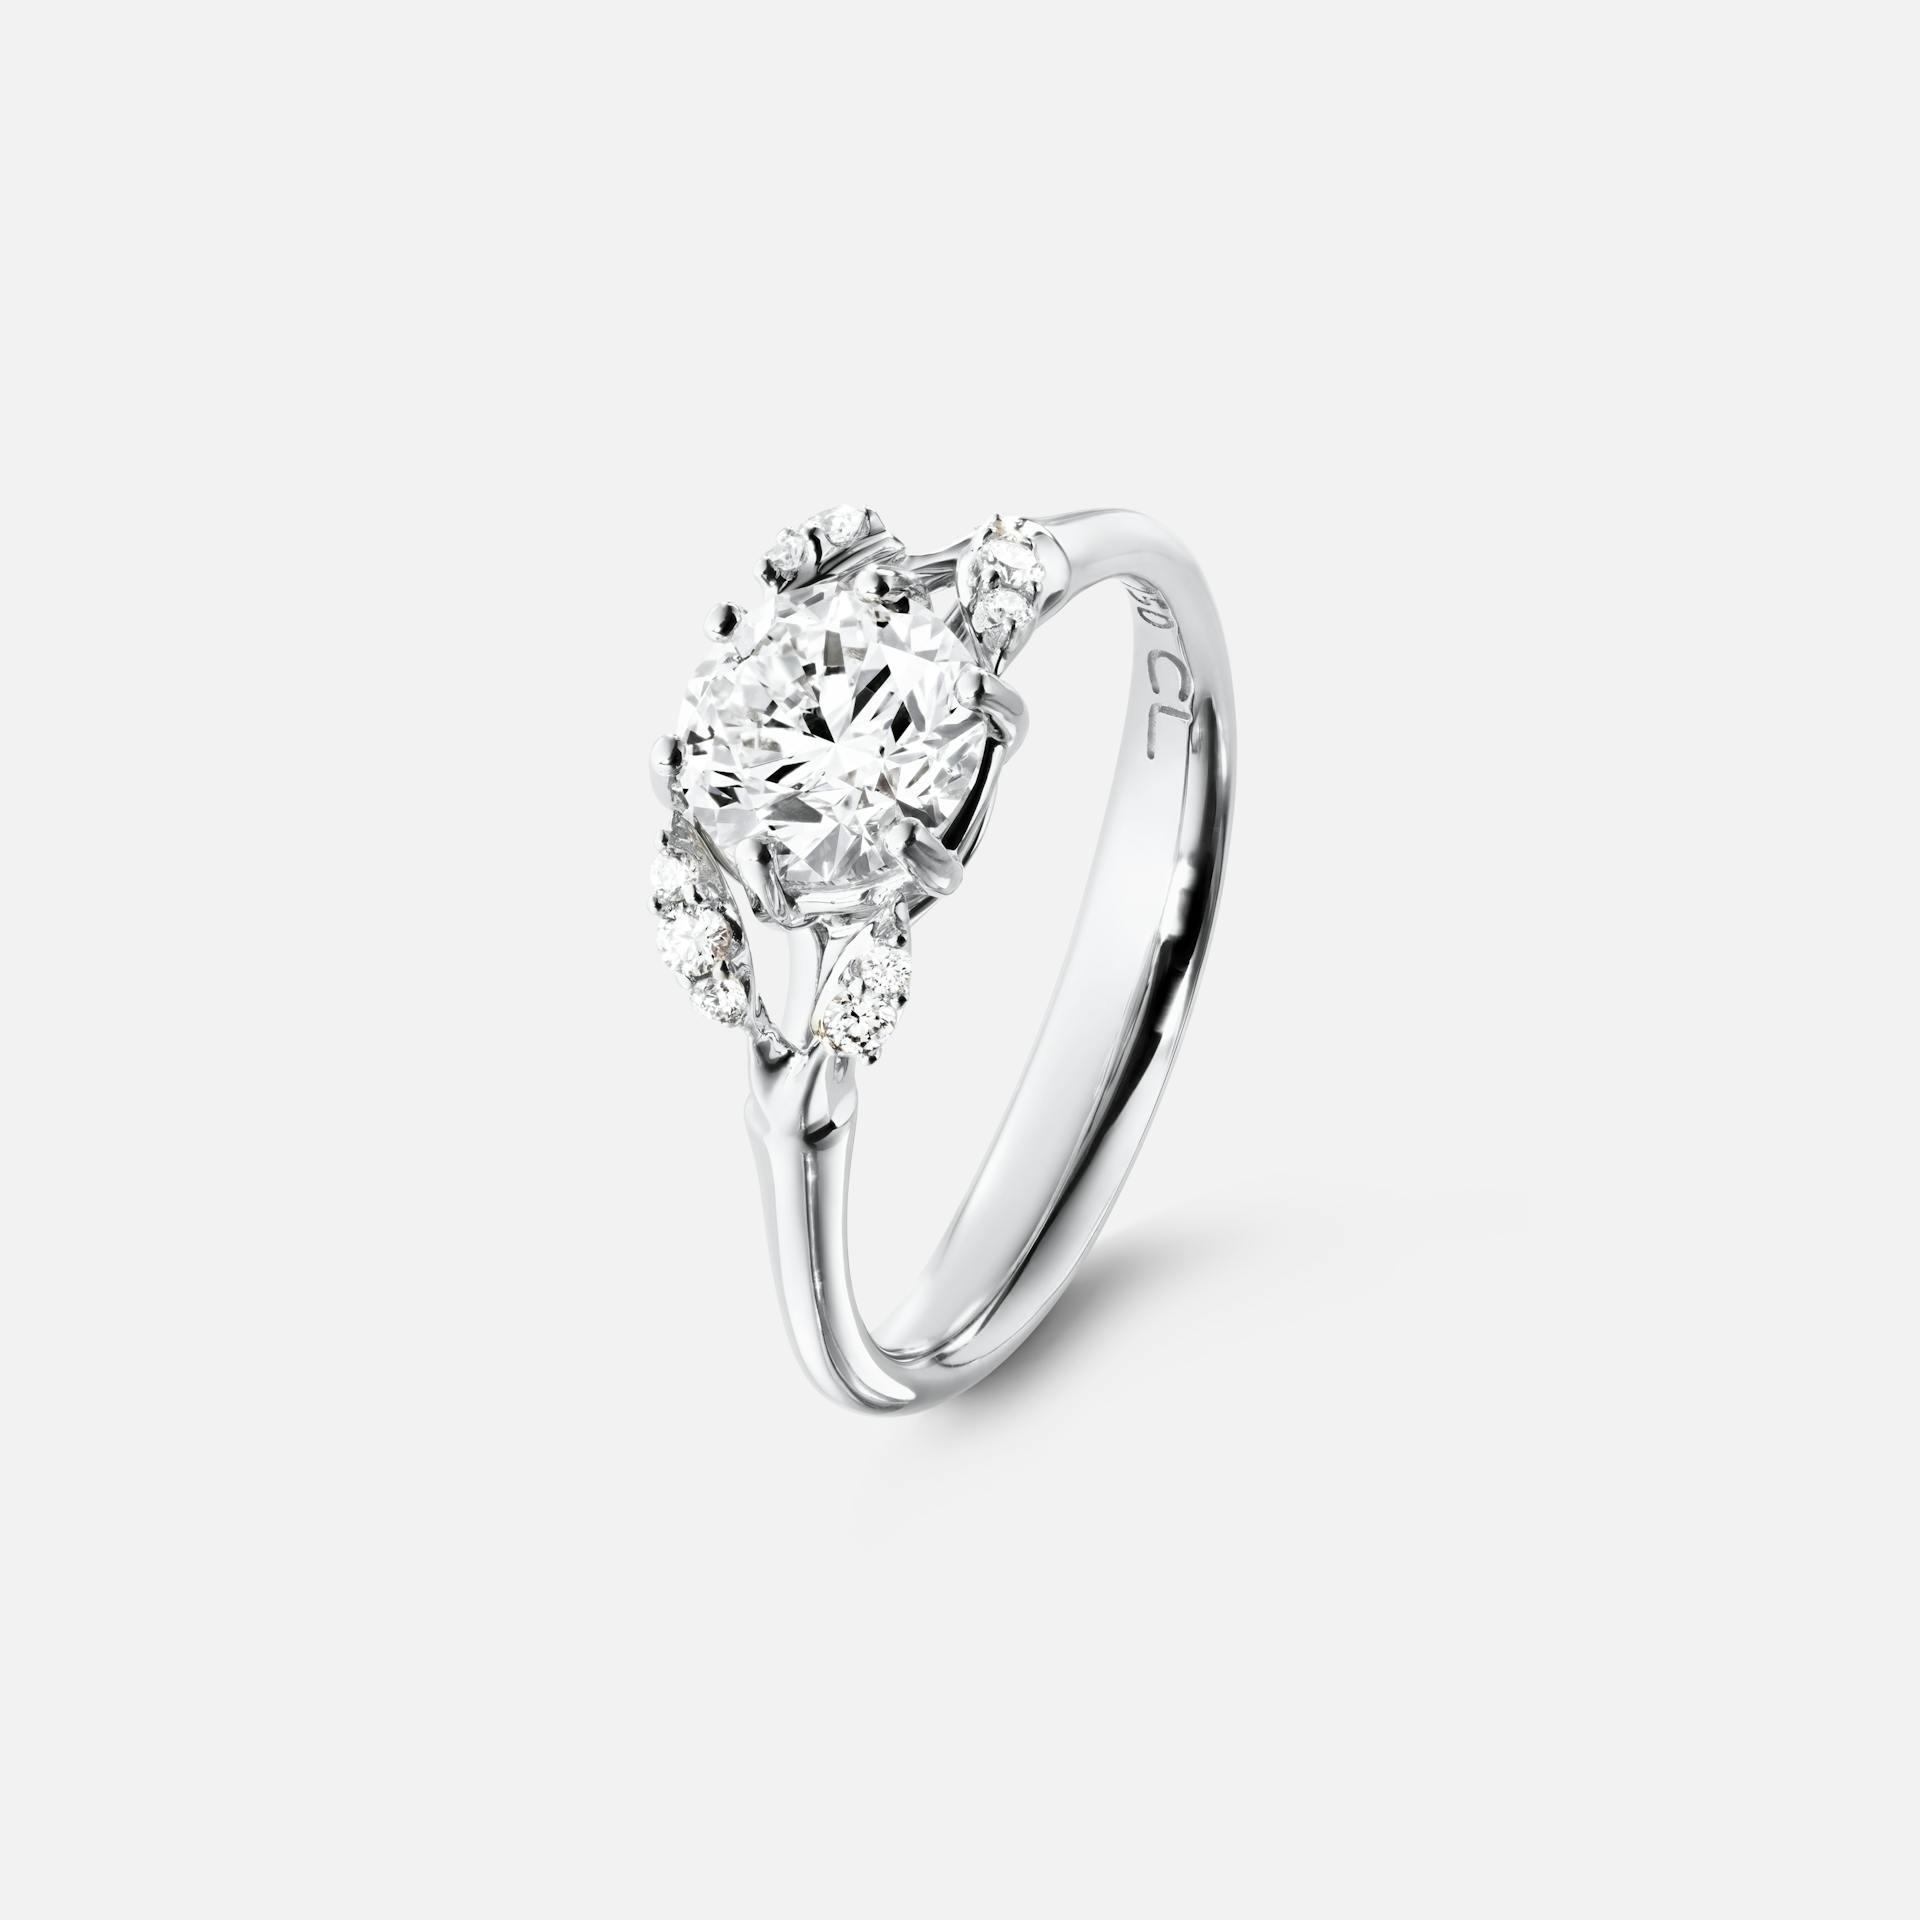 Winter Frost solitaire ring Dummy item for web - ring solitaire WinterFrost WG 18k hvidguld sat med brillantslebet diamant fra 0,80 ct.